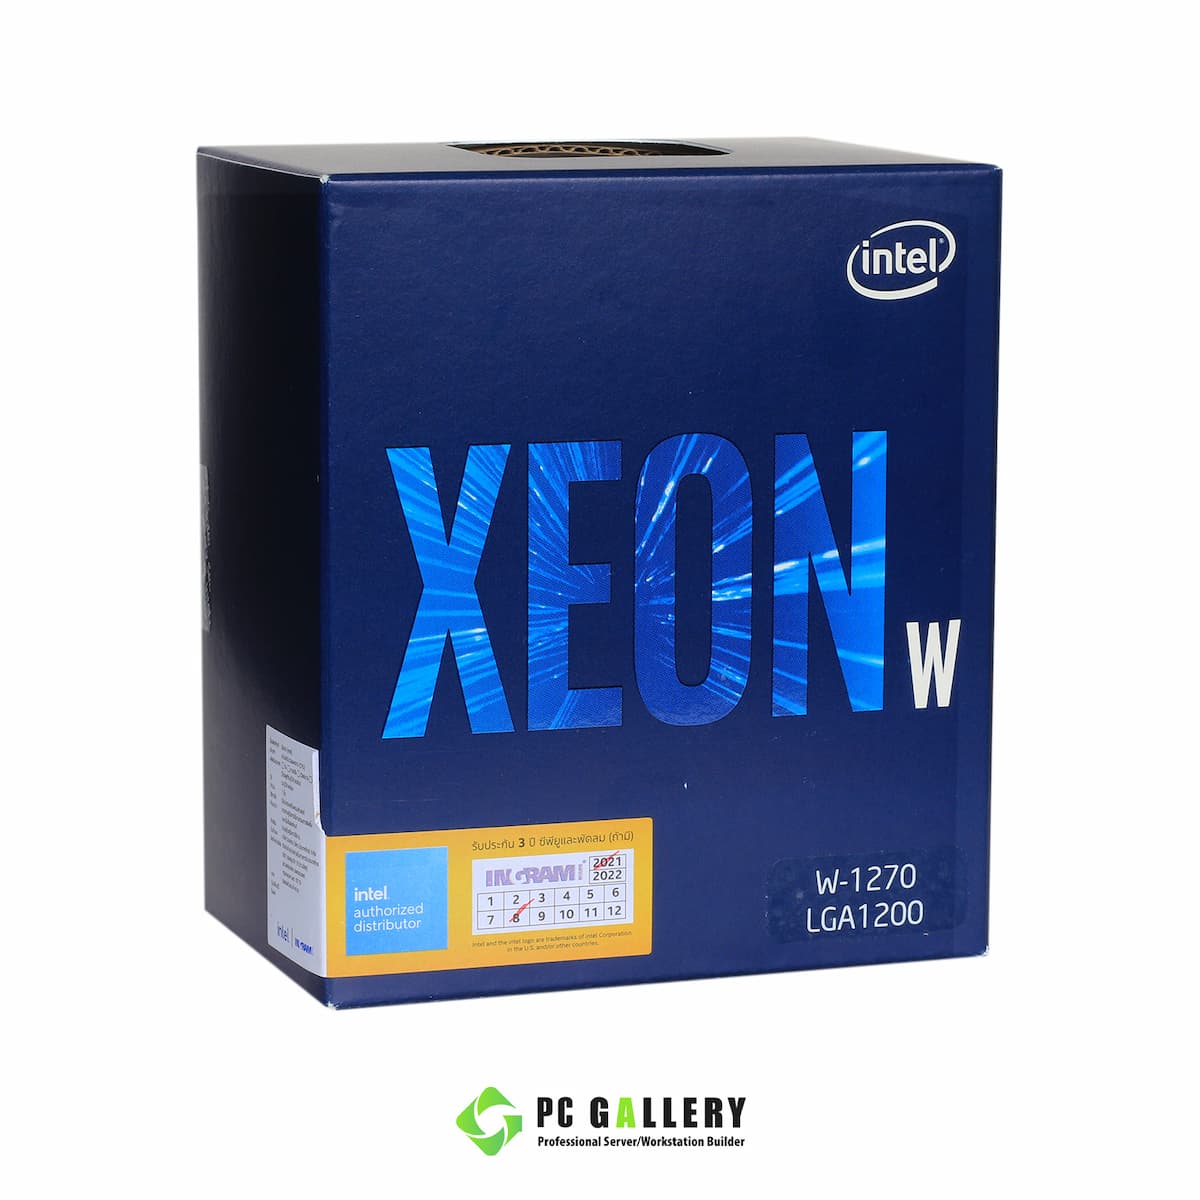 Intel-Xeon-W-1270